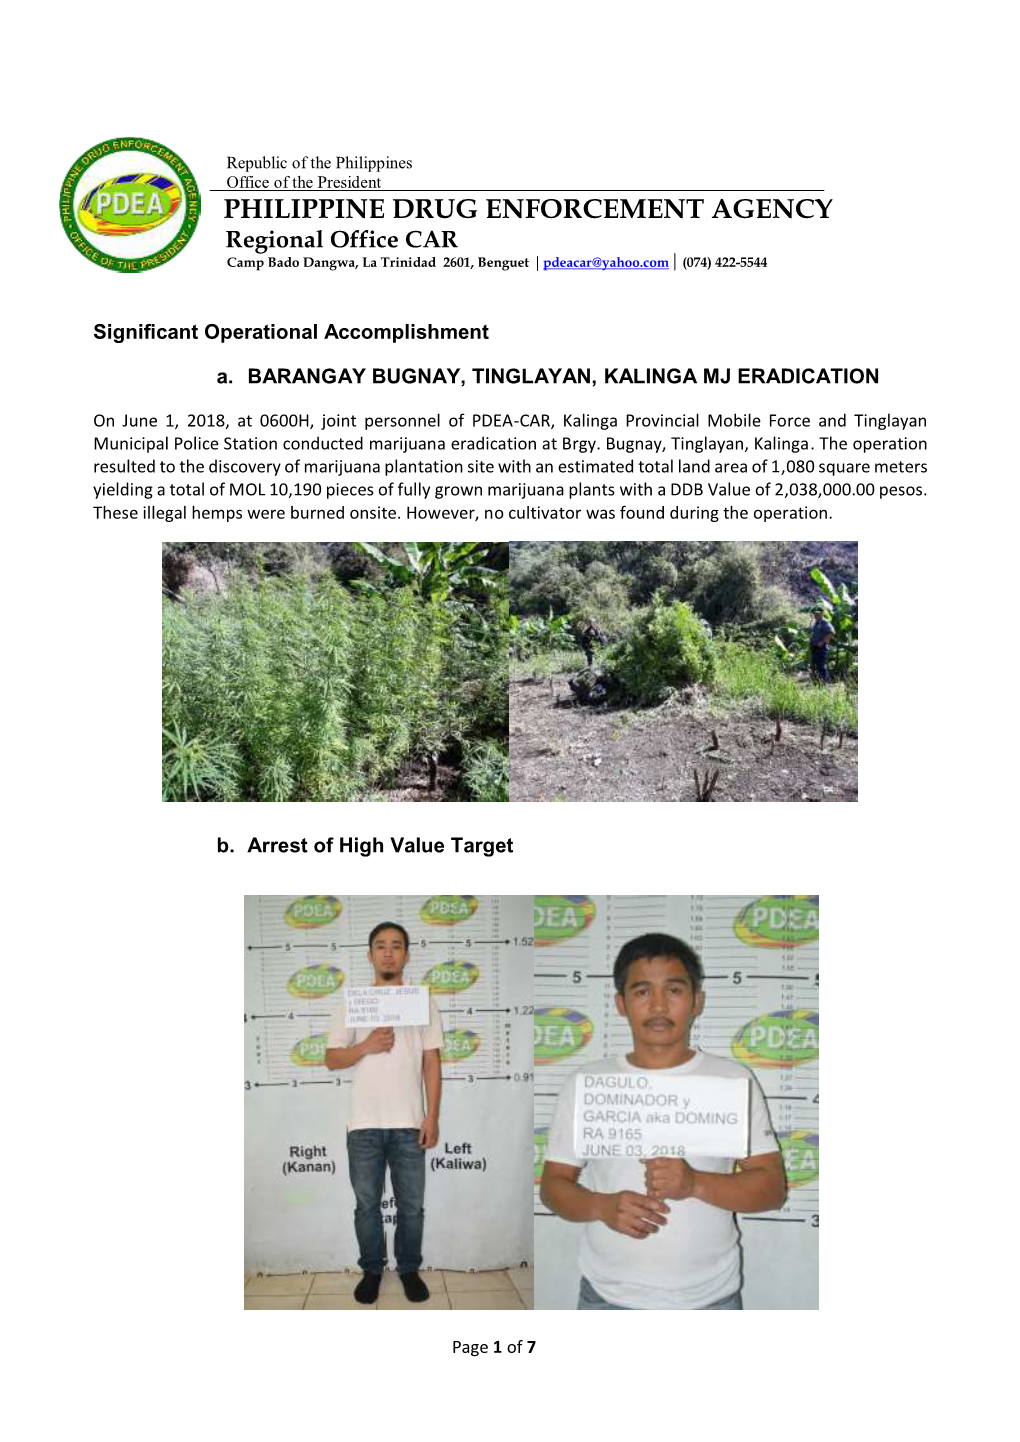 June 1, 2018, at 0600H, Joint Personnel of PDEA-CAR, Kalinga Provincial Mobile Force and Tinglayan Municipal Police Station Conducted Marijuana Eradication at Brgy